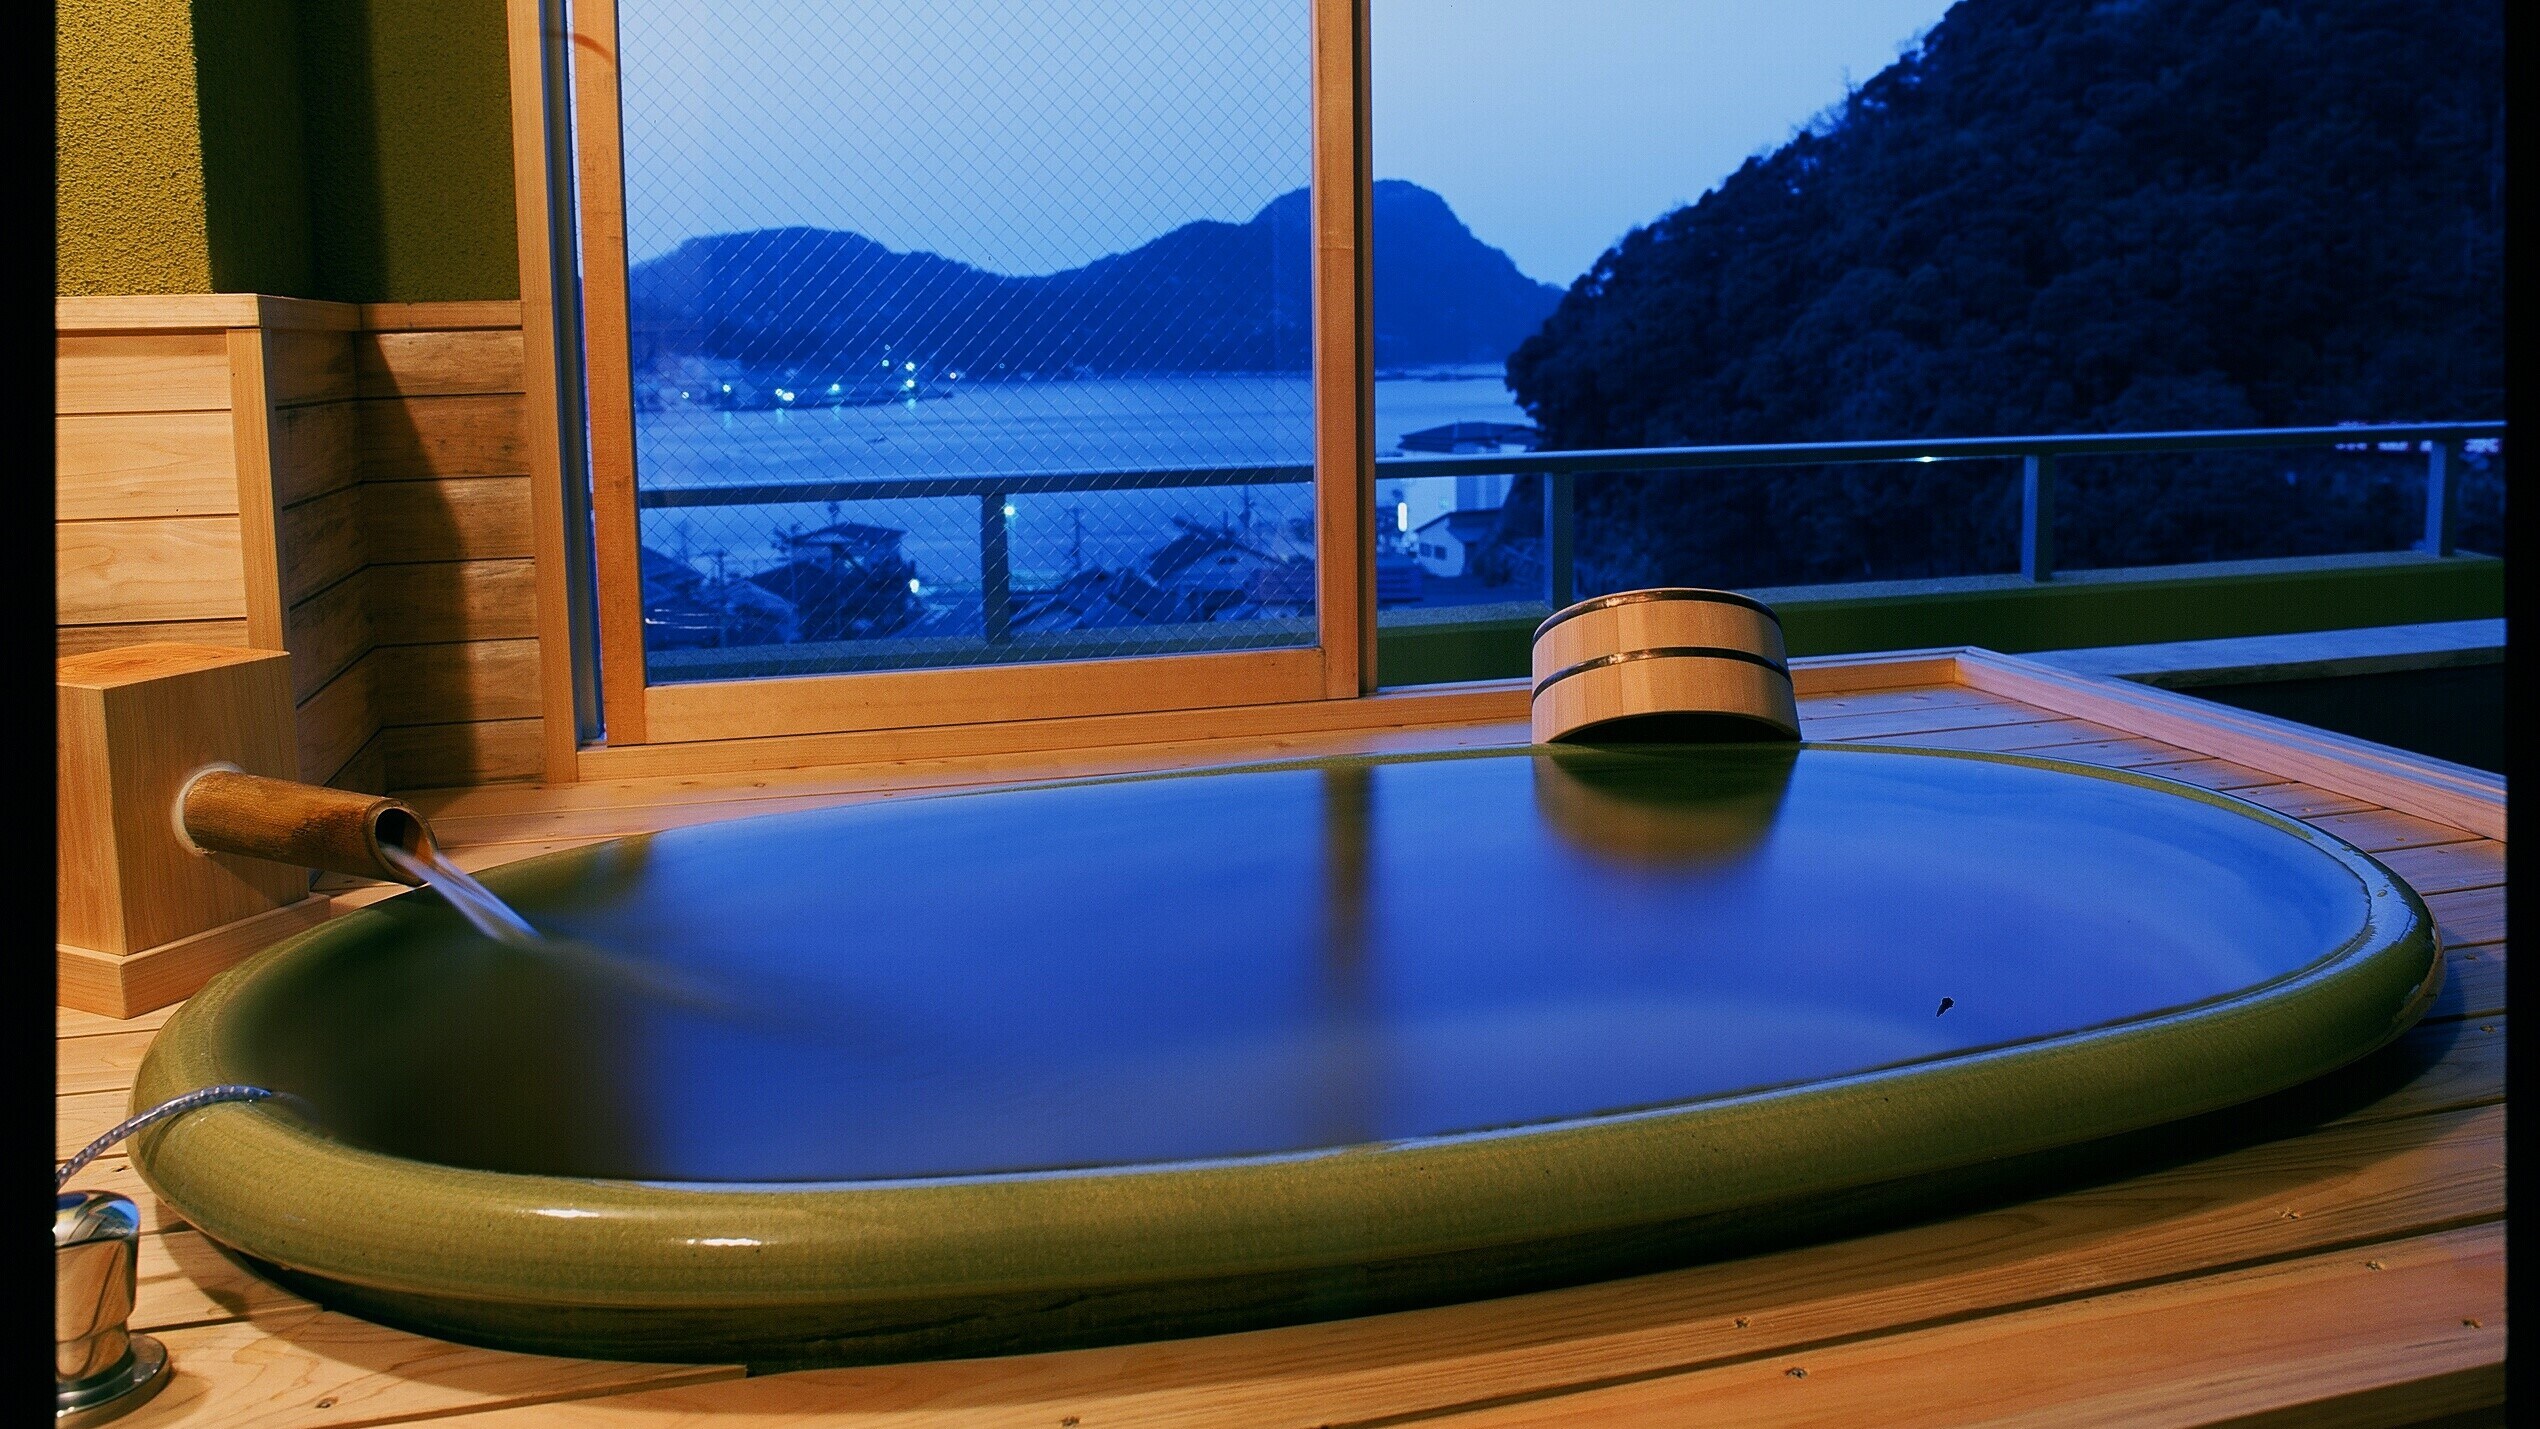 At "Tsukiankou", you can enjoy a "semi-open-air hot spring bath" overlooking Shibayama Port.